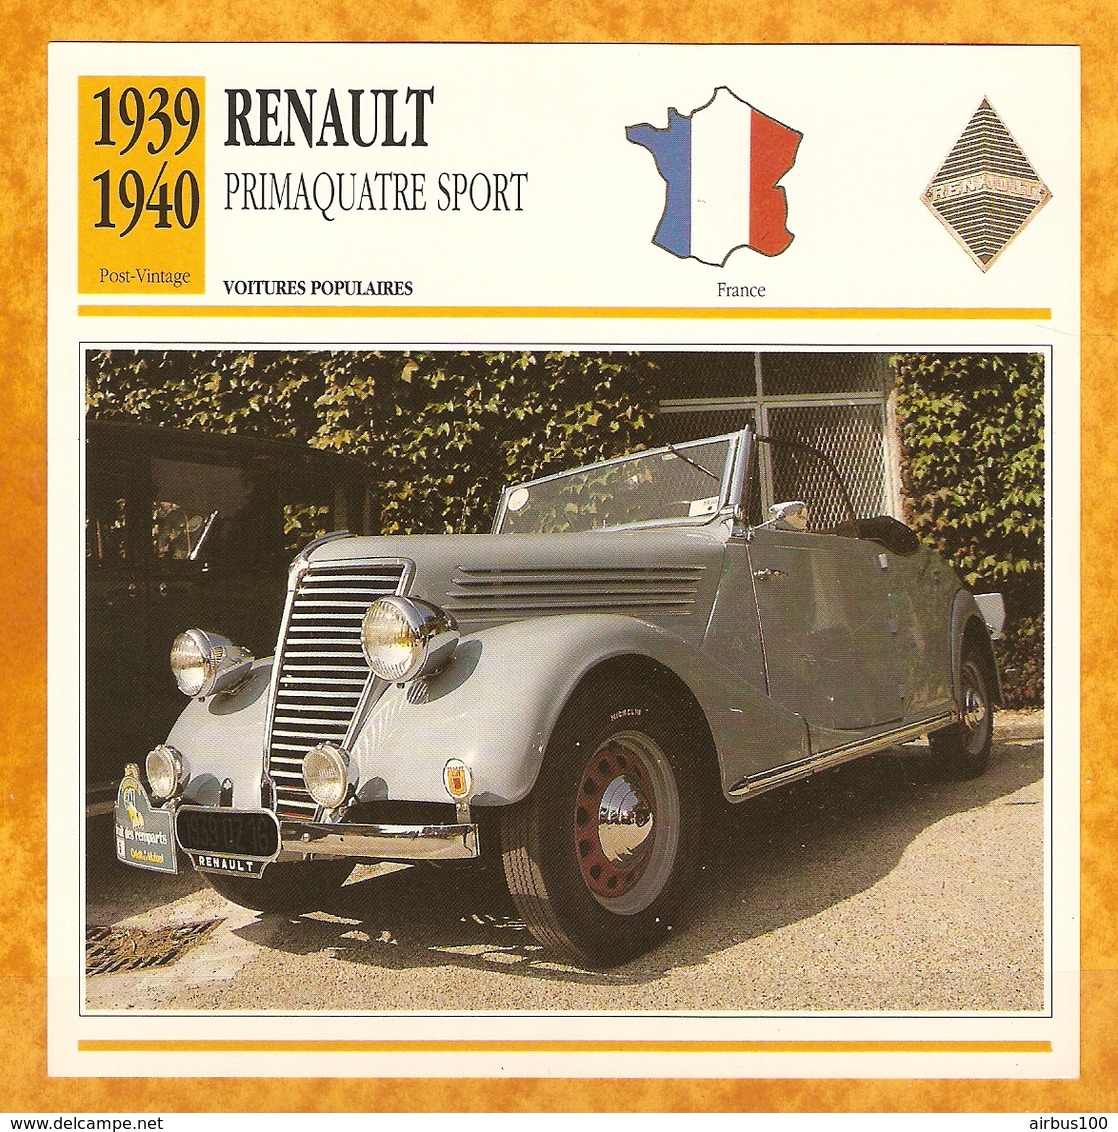 1939 FRANCE VIEILLE VOITURE RENAULT PRIMAQUATRE SPORT - FRANCE OLD CAR - FRANCIA VIEJO COCHE - VECCHIA MACCHINA - Automobili